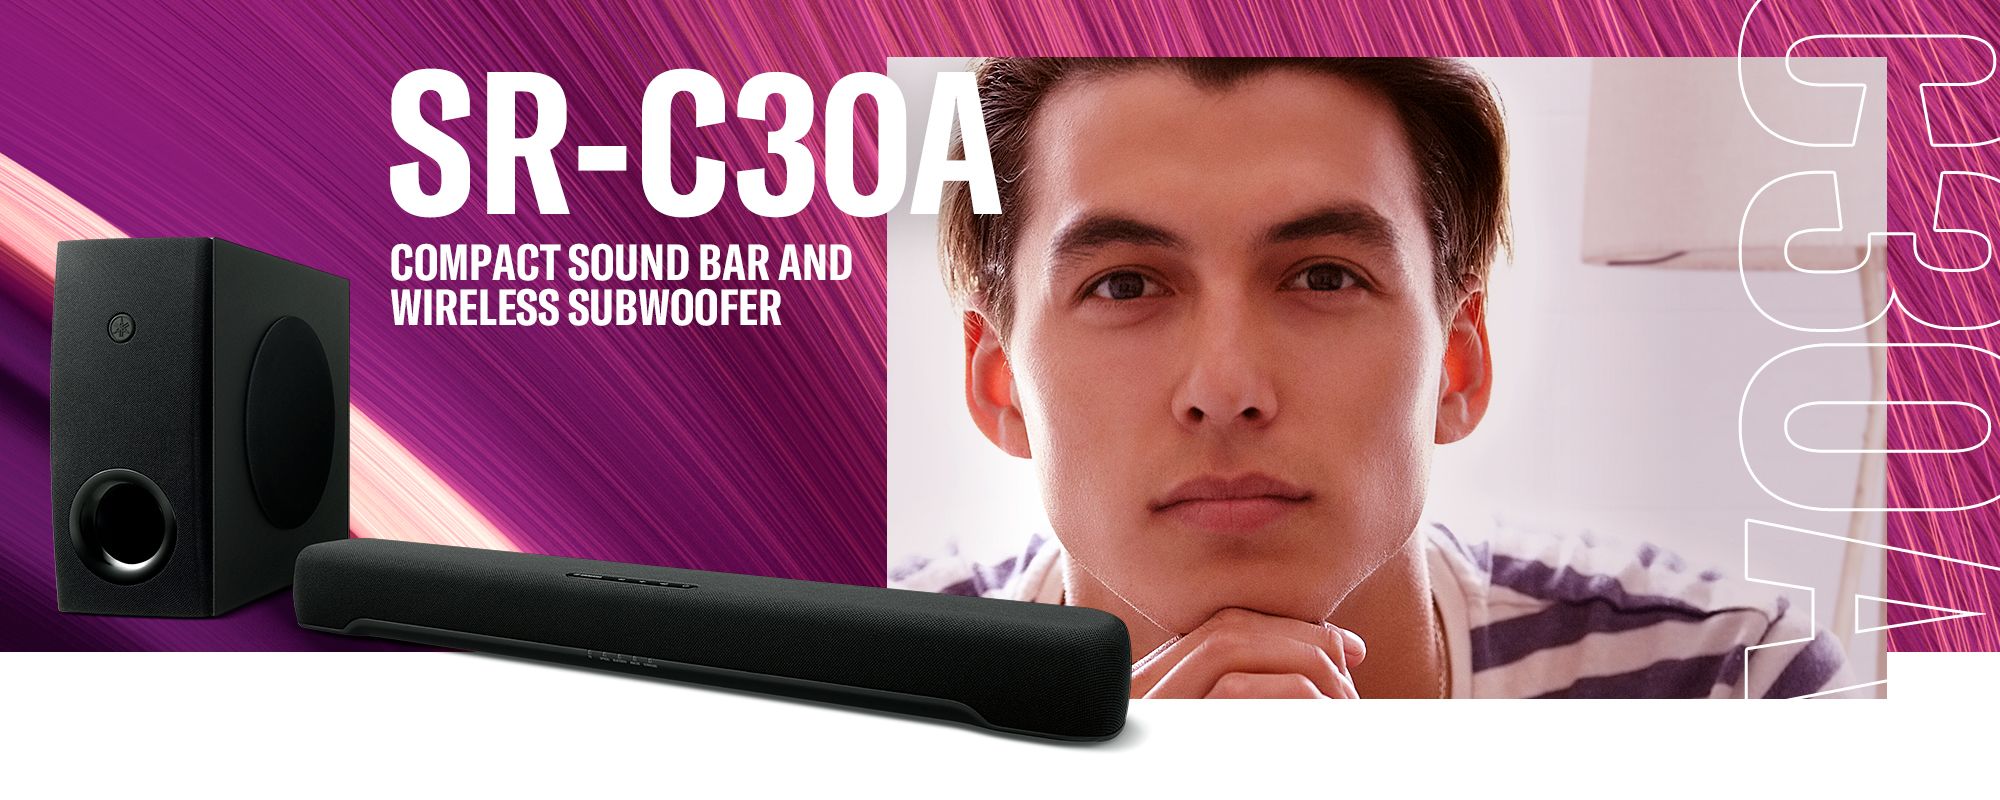 SR-C30A Compact Sound Bar & Wireless Subwoofer - Yamaha USA